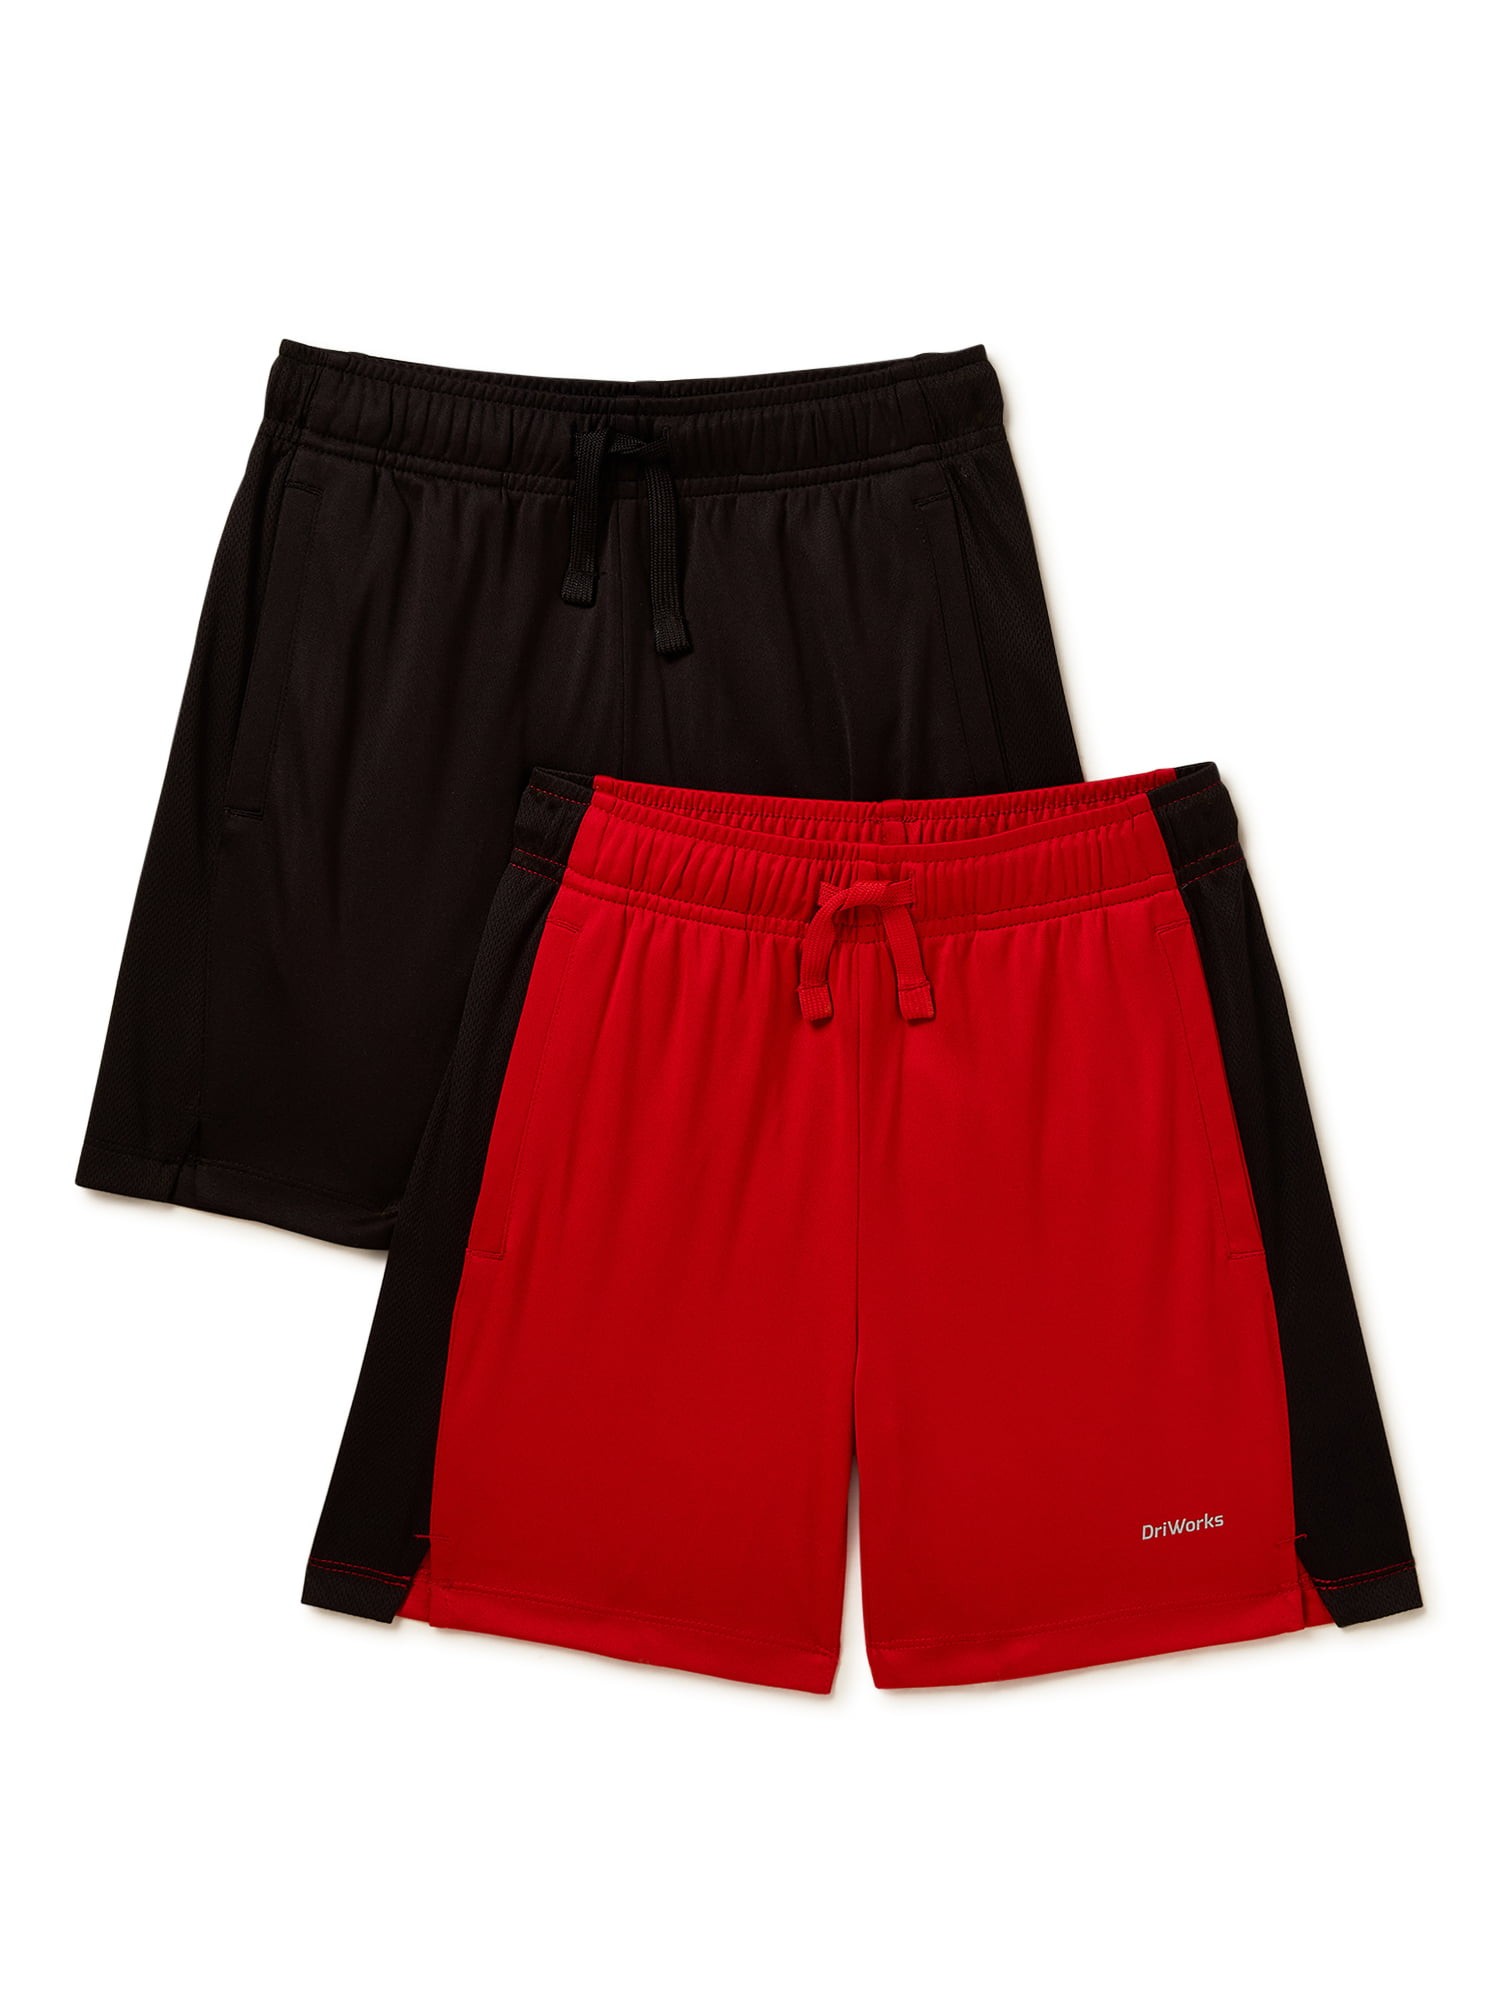 Athletic Works Boys Mesh Shorts, 3-Pack, Sizes 4-18 & Husky 